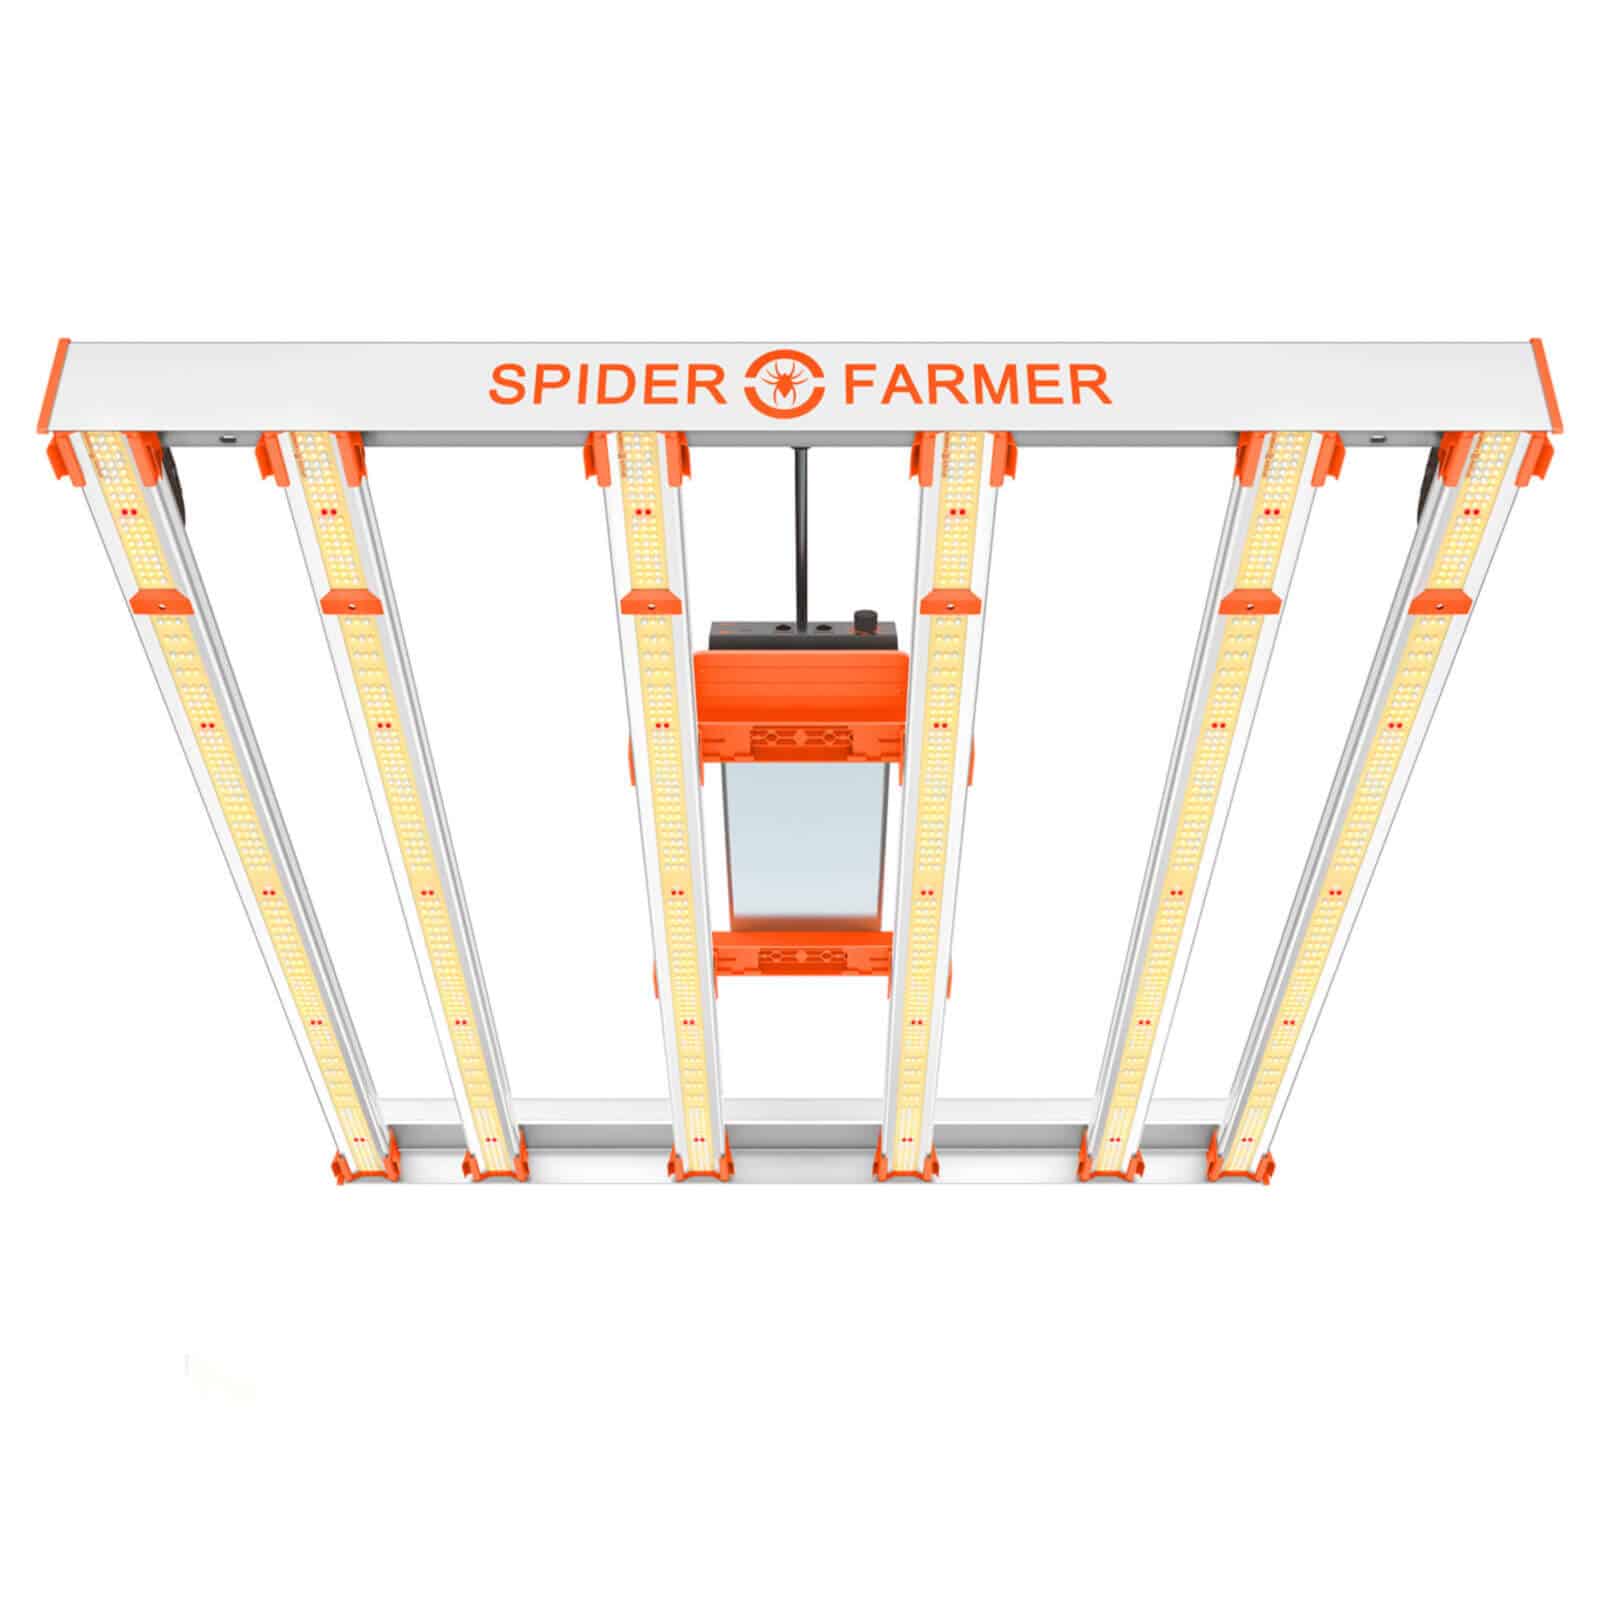 Spider Farmer® G5000 480W Dimmable Cost-effective Full Spectrum LED Light - Spider Farmer Official